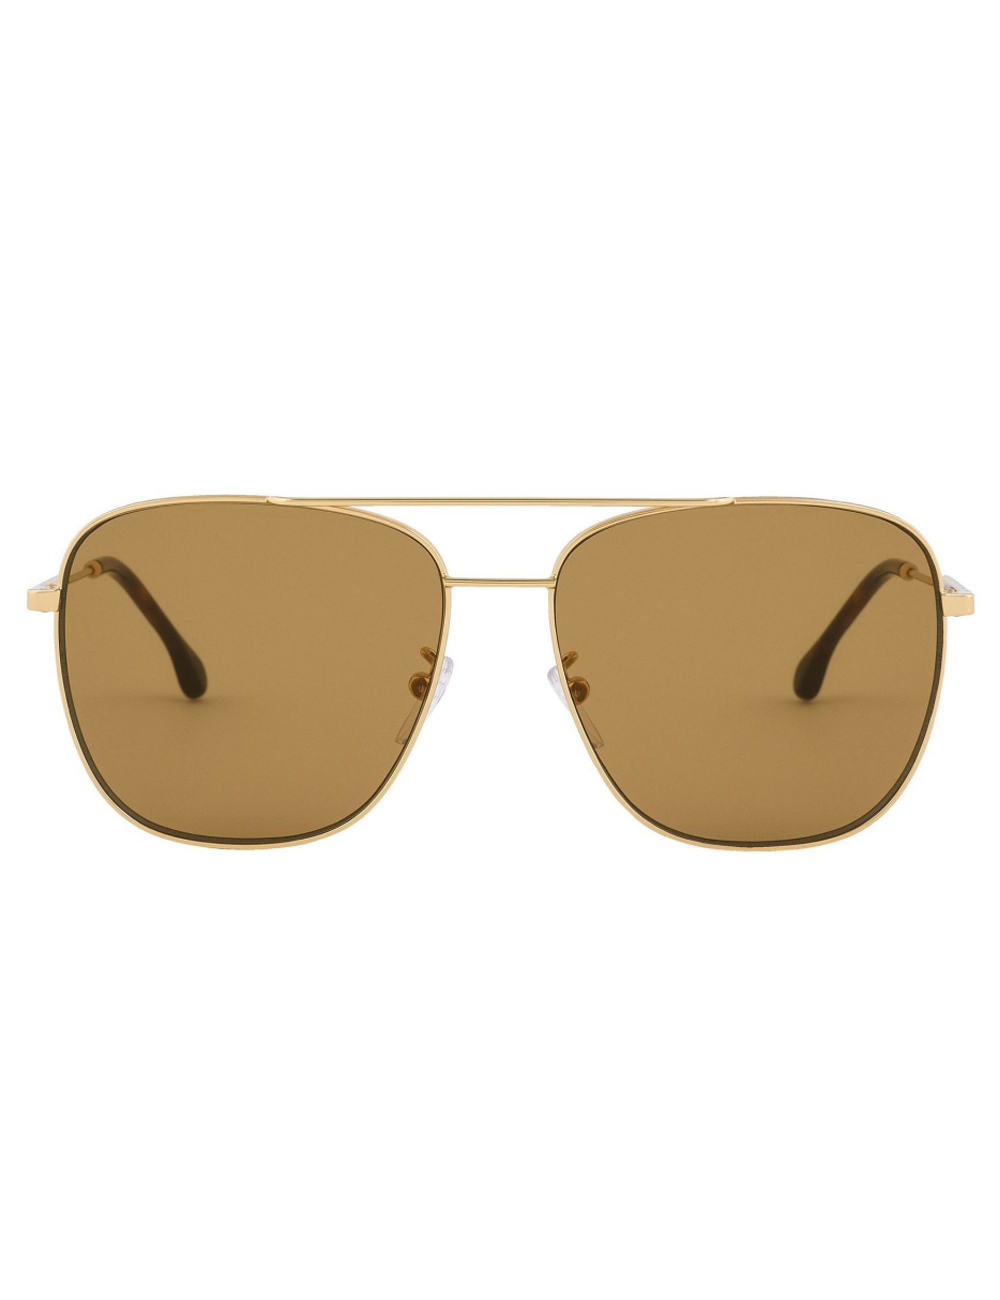 фото Солнцезащитные очки мужские paul smith avery v2